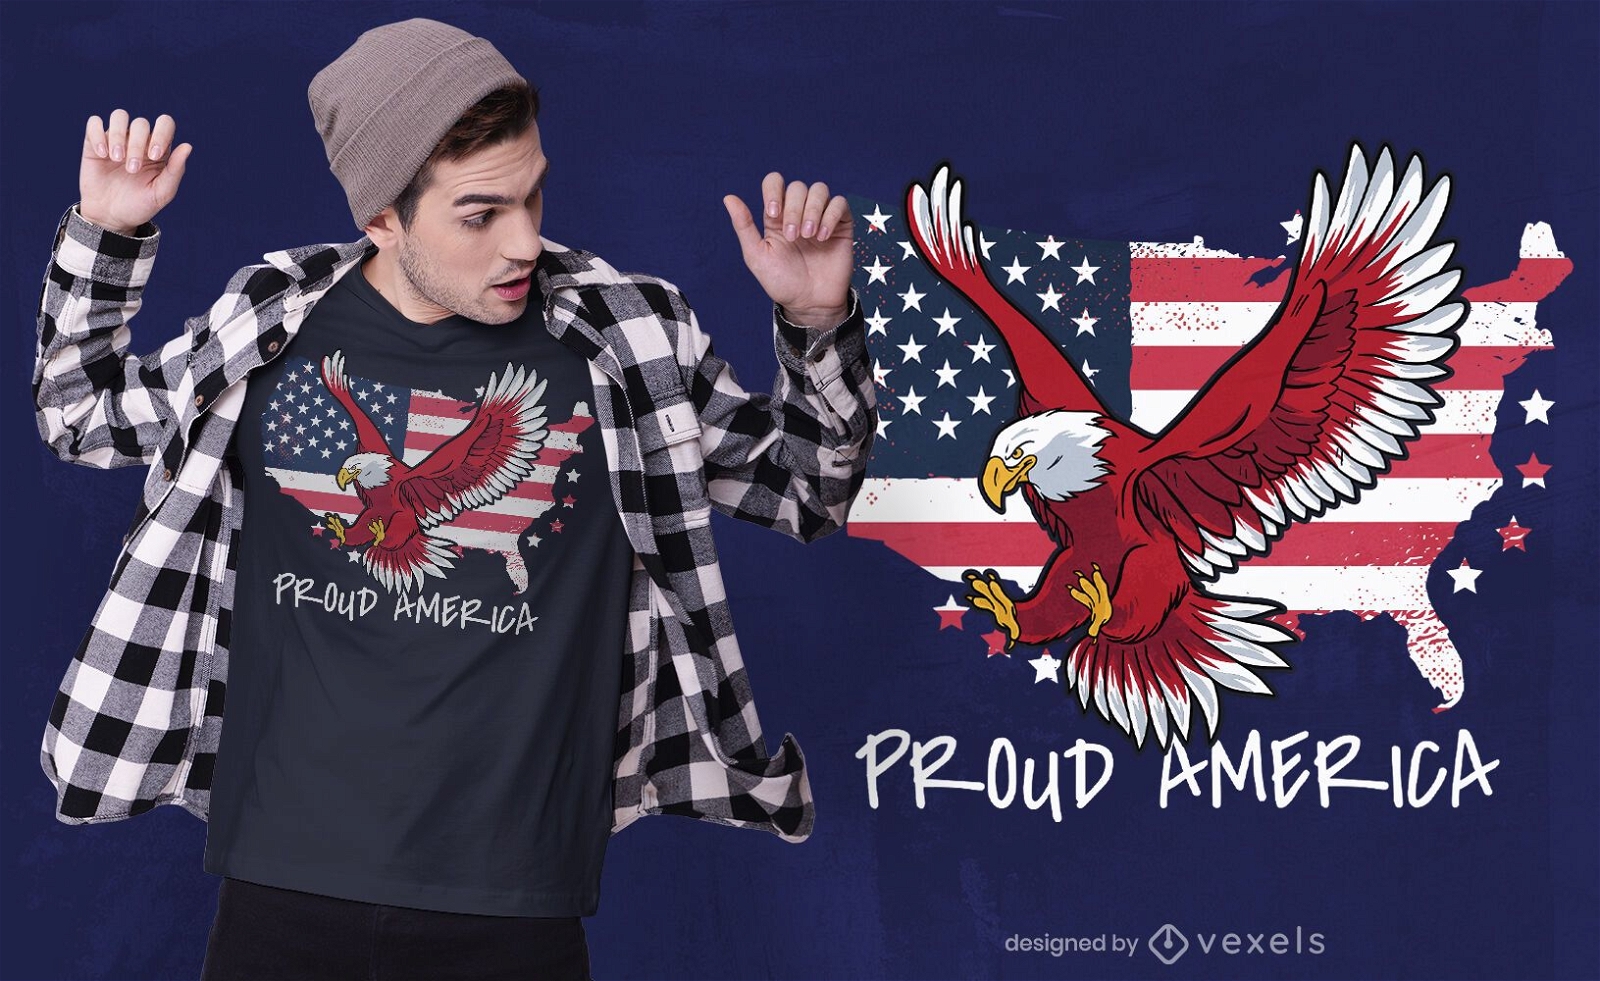 Proud america t-shirt design